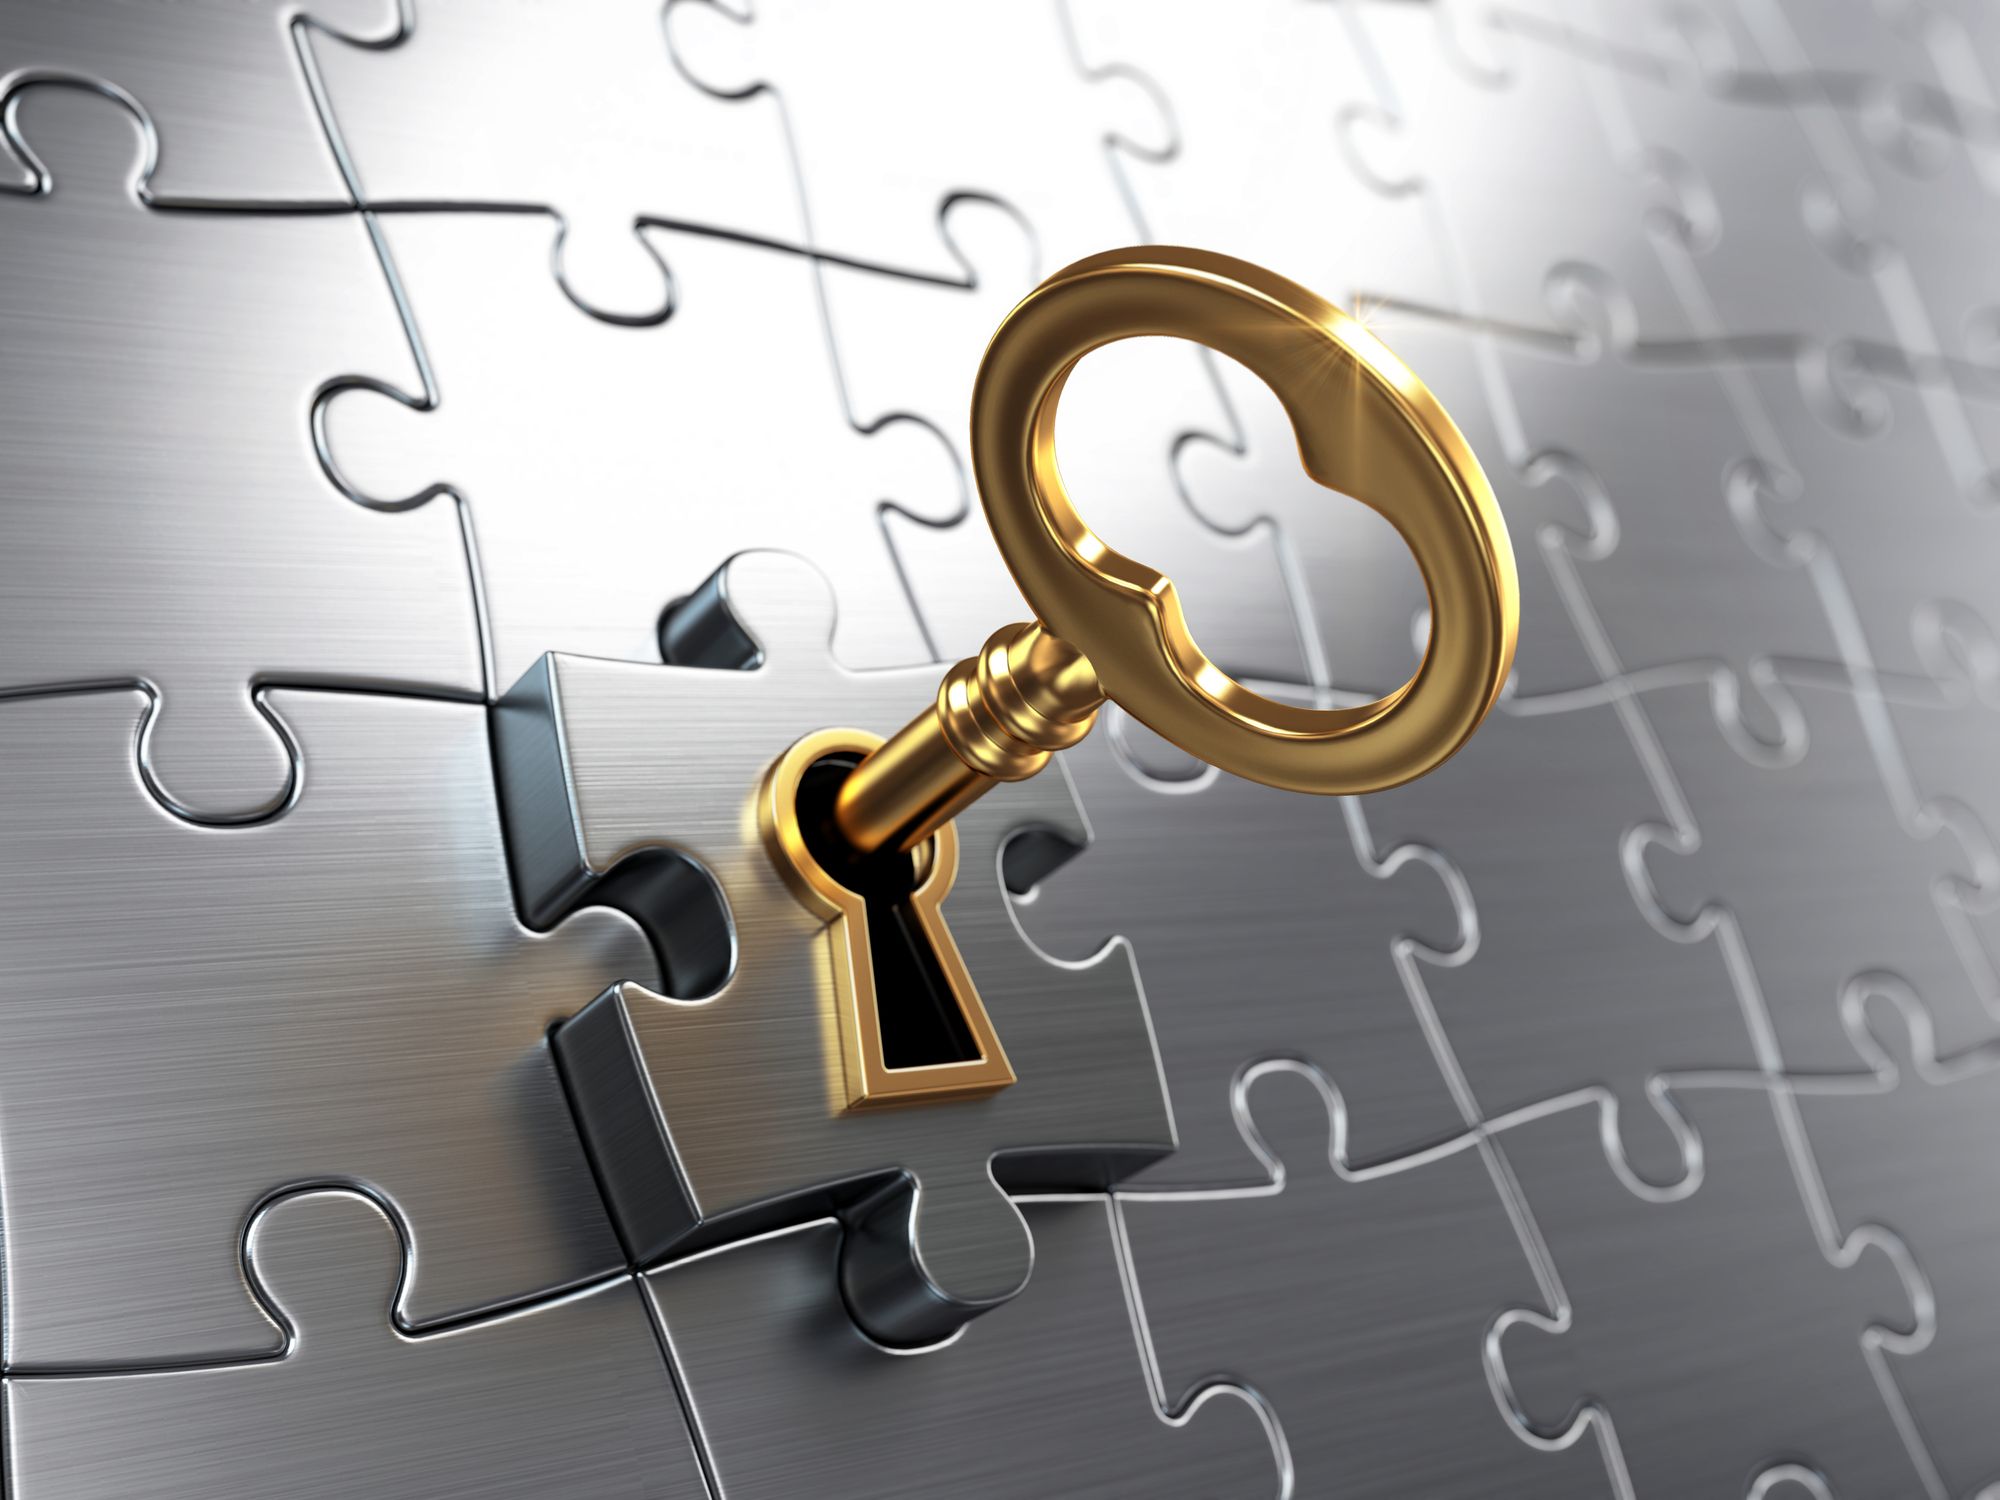 A key opening a lockbock of jigsaw puzzles